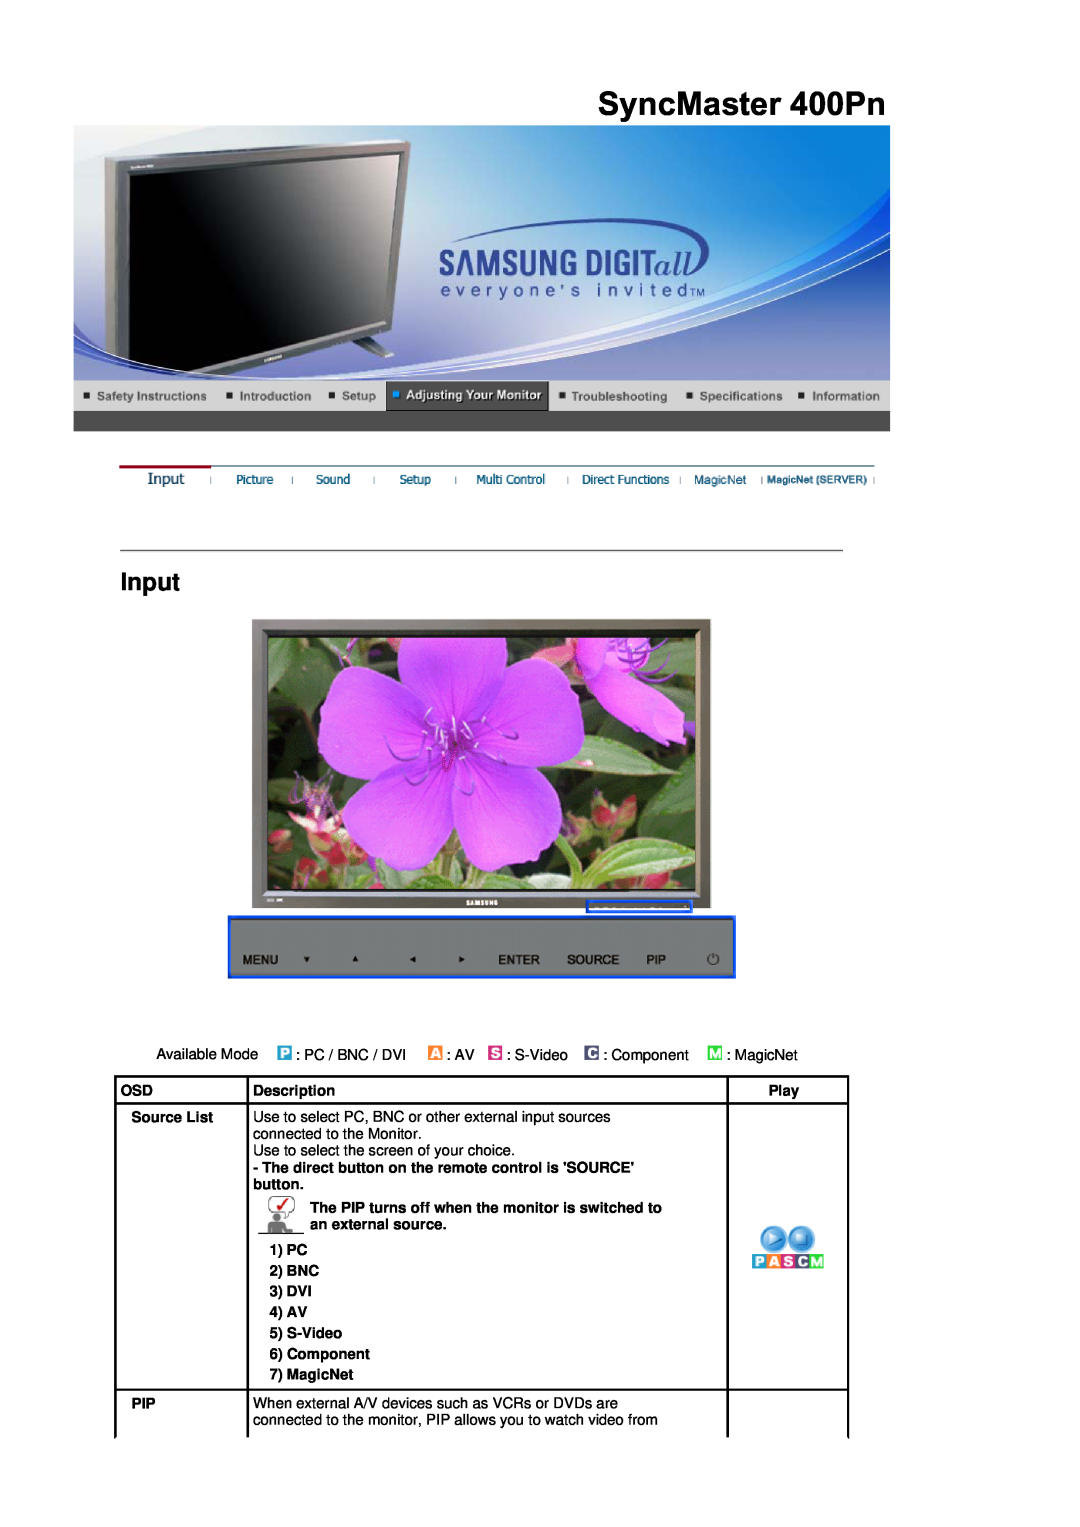 Samsung 400Pn, 400P manual Input, SyncMaster 400Pn, Available Mode PC / BNC / DVI, AV S-Video Component MagicNet 